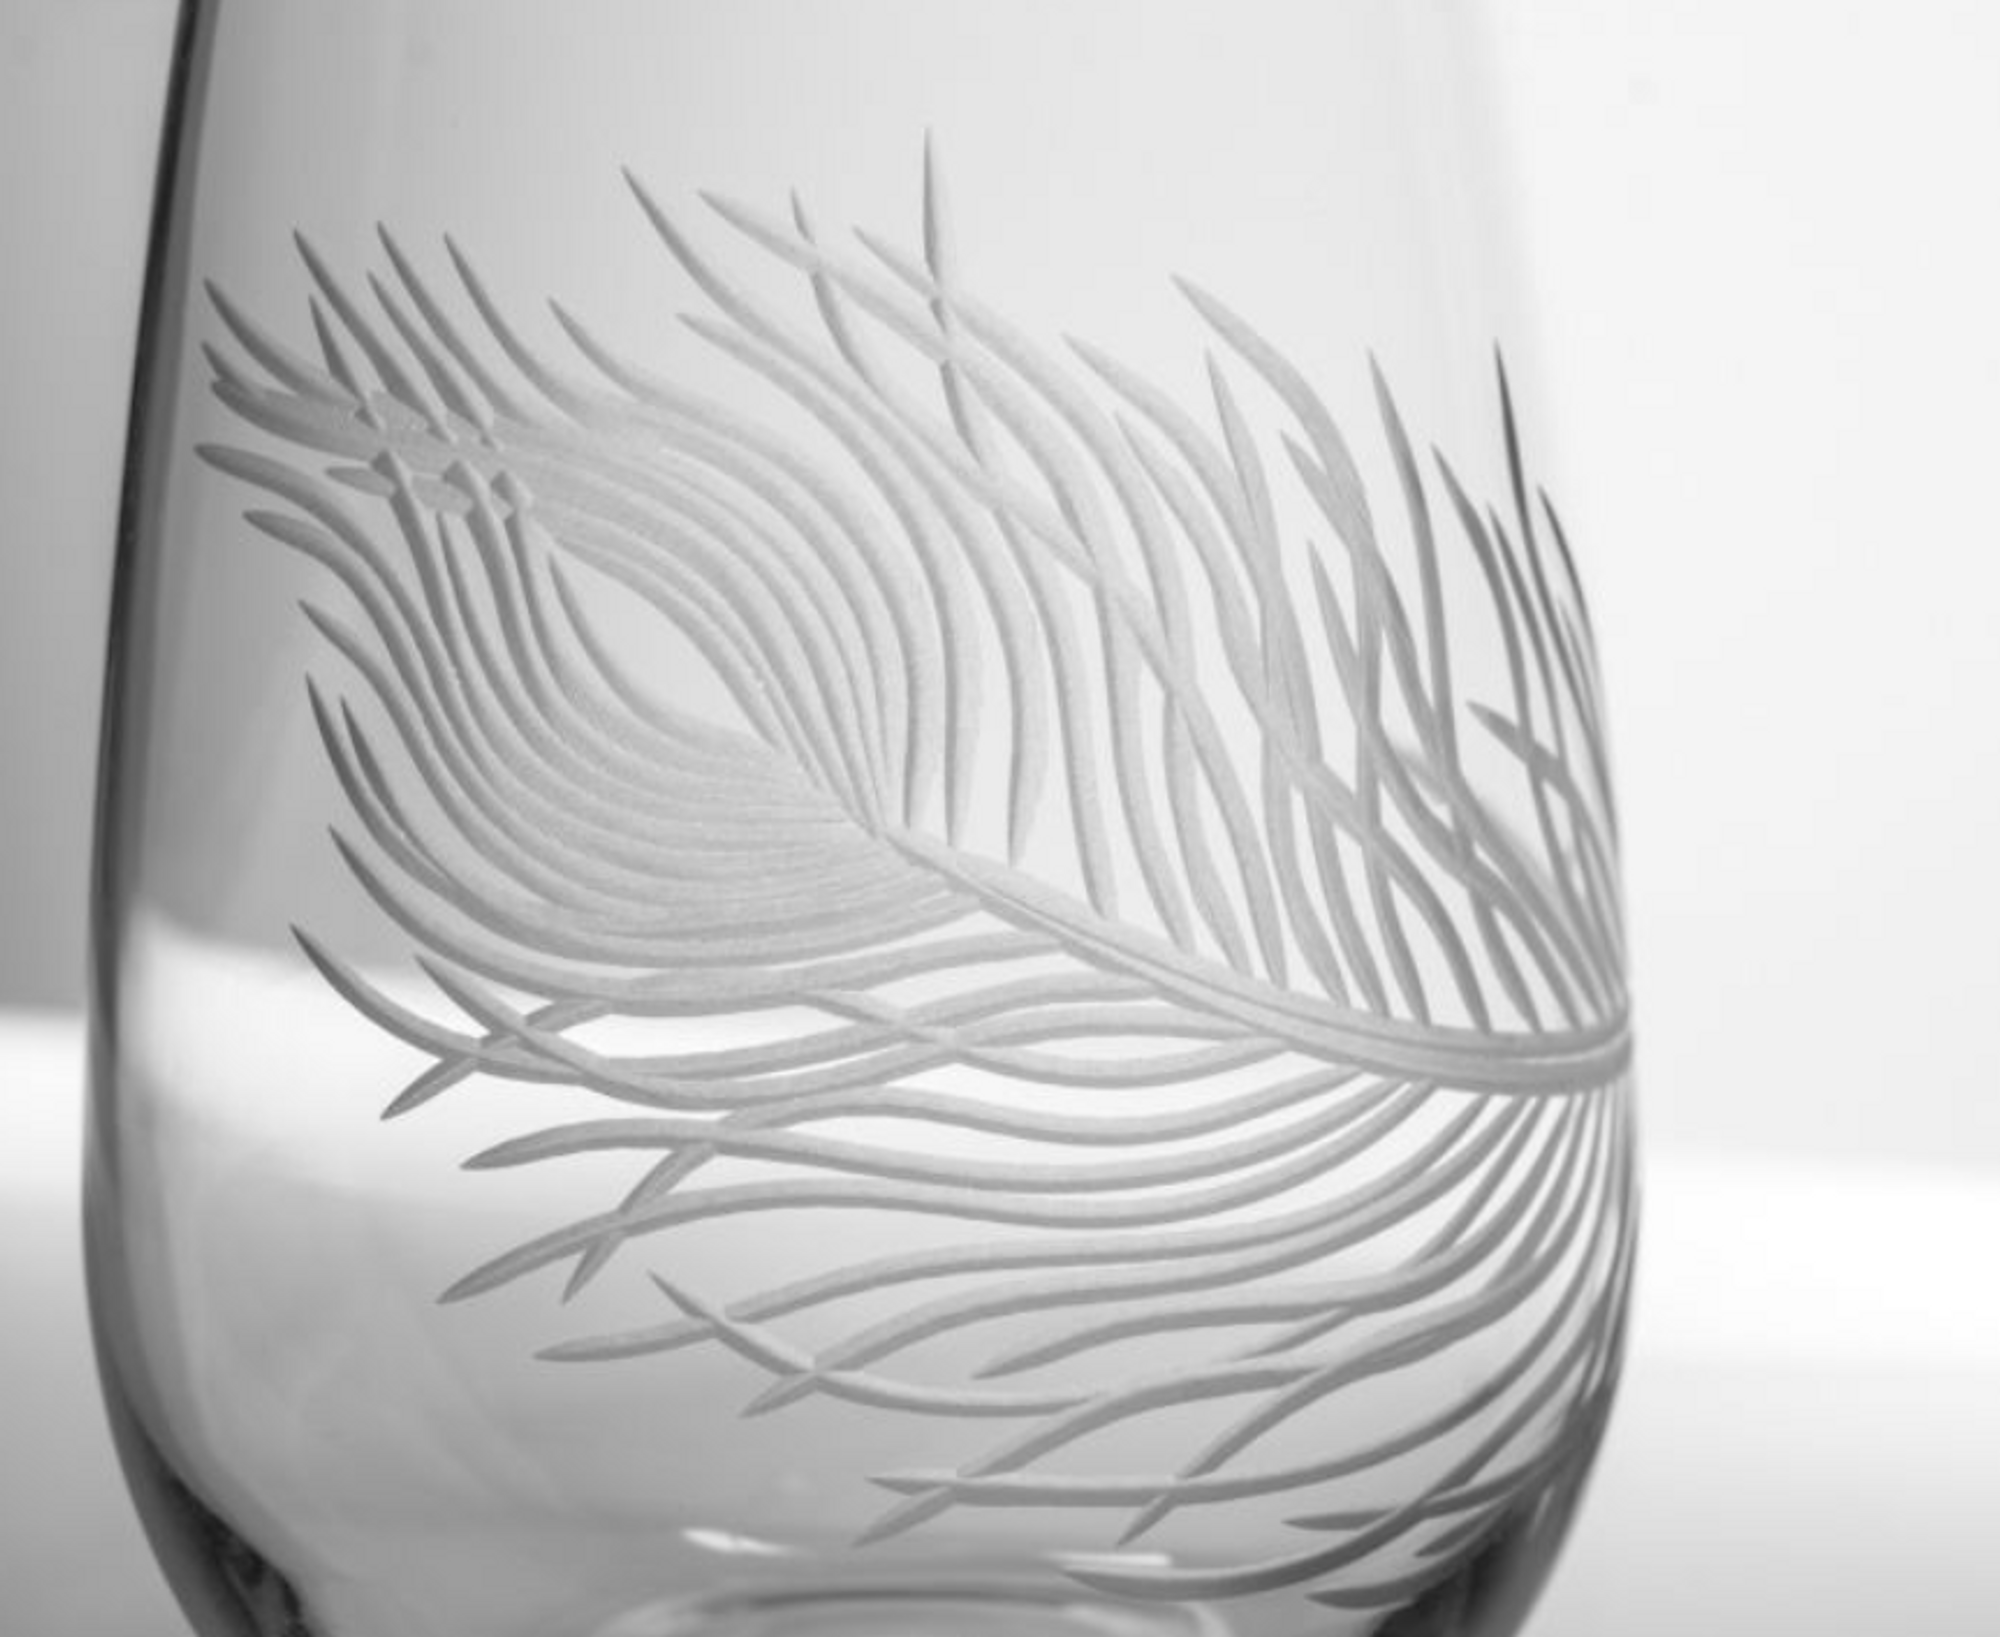 Artland Inc. Peacock Wine Glasses - Set of 4 